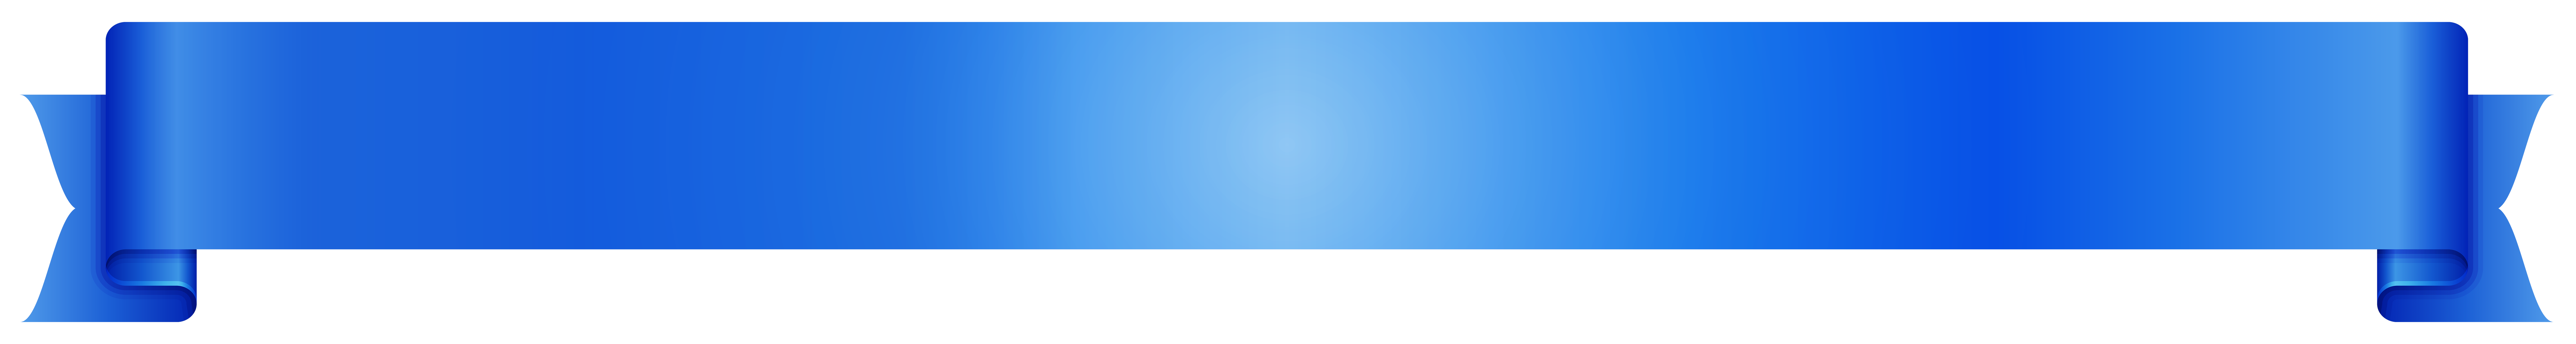 Полоска синяя на прозрачном фоне